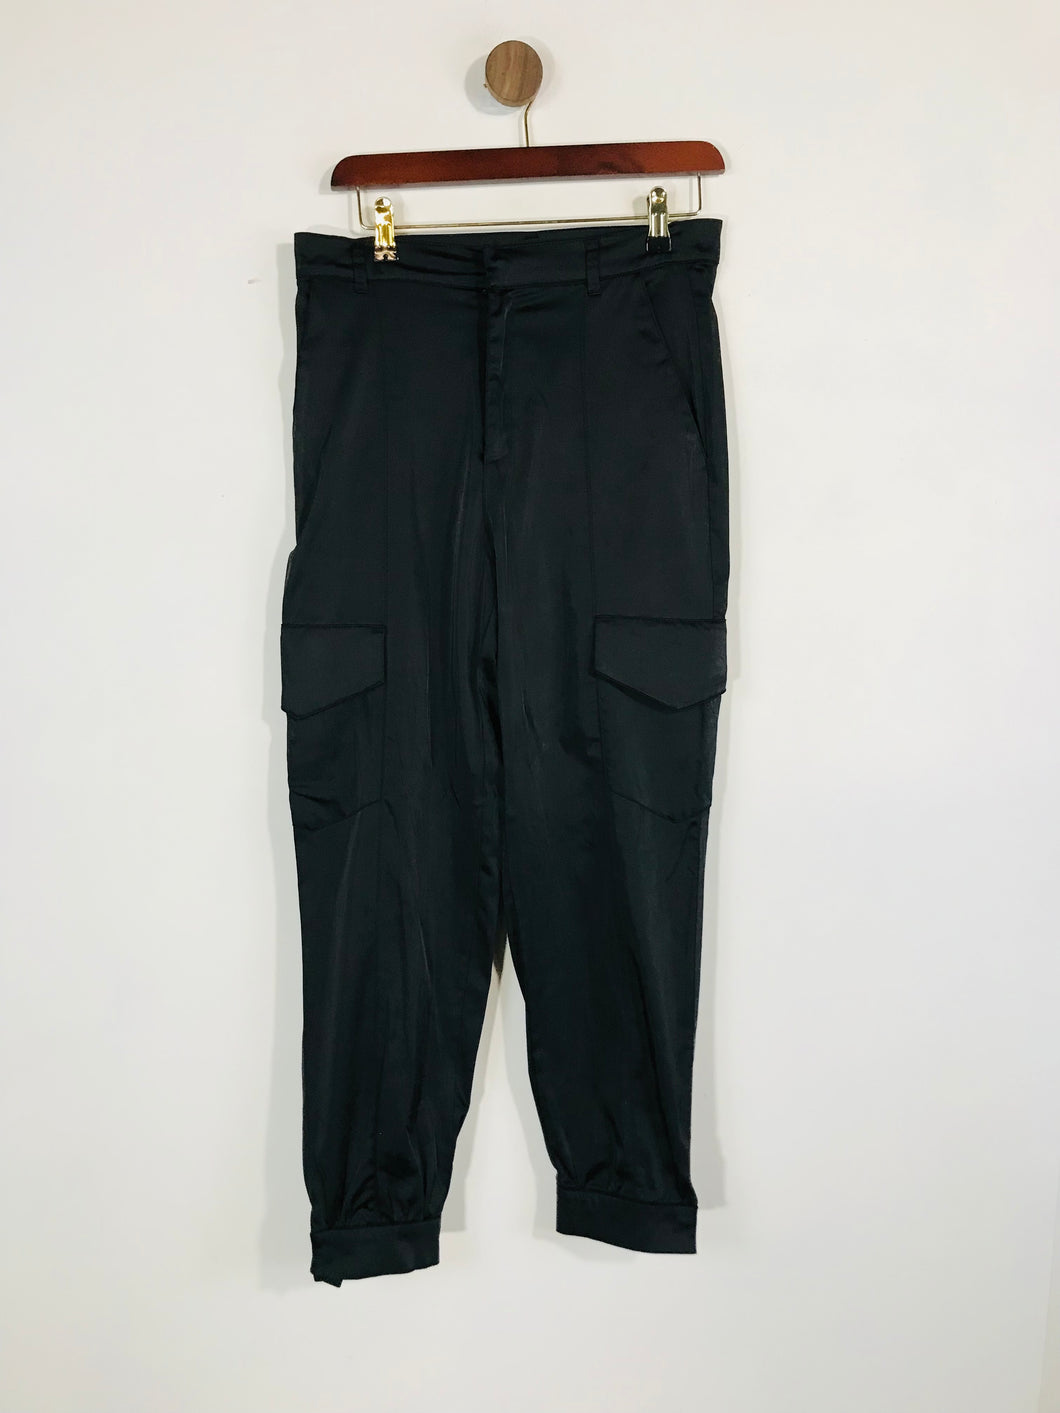 Zara Women's High Waist Cargo Casual Trousers | M UK10-12 | Black